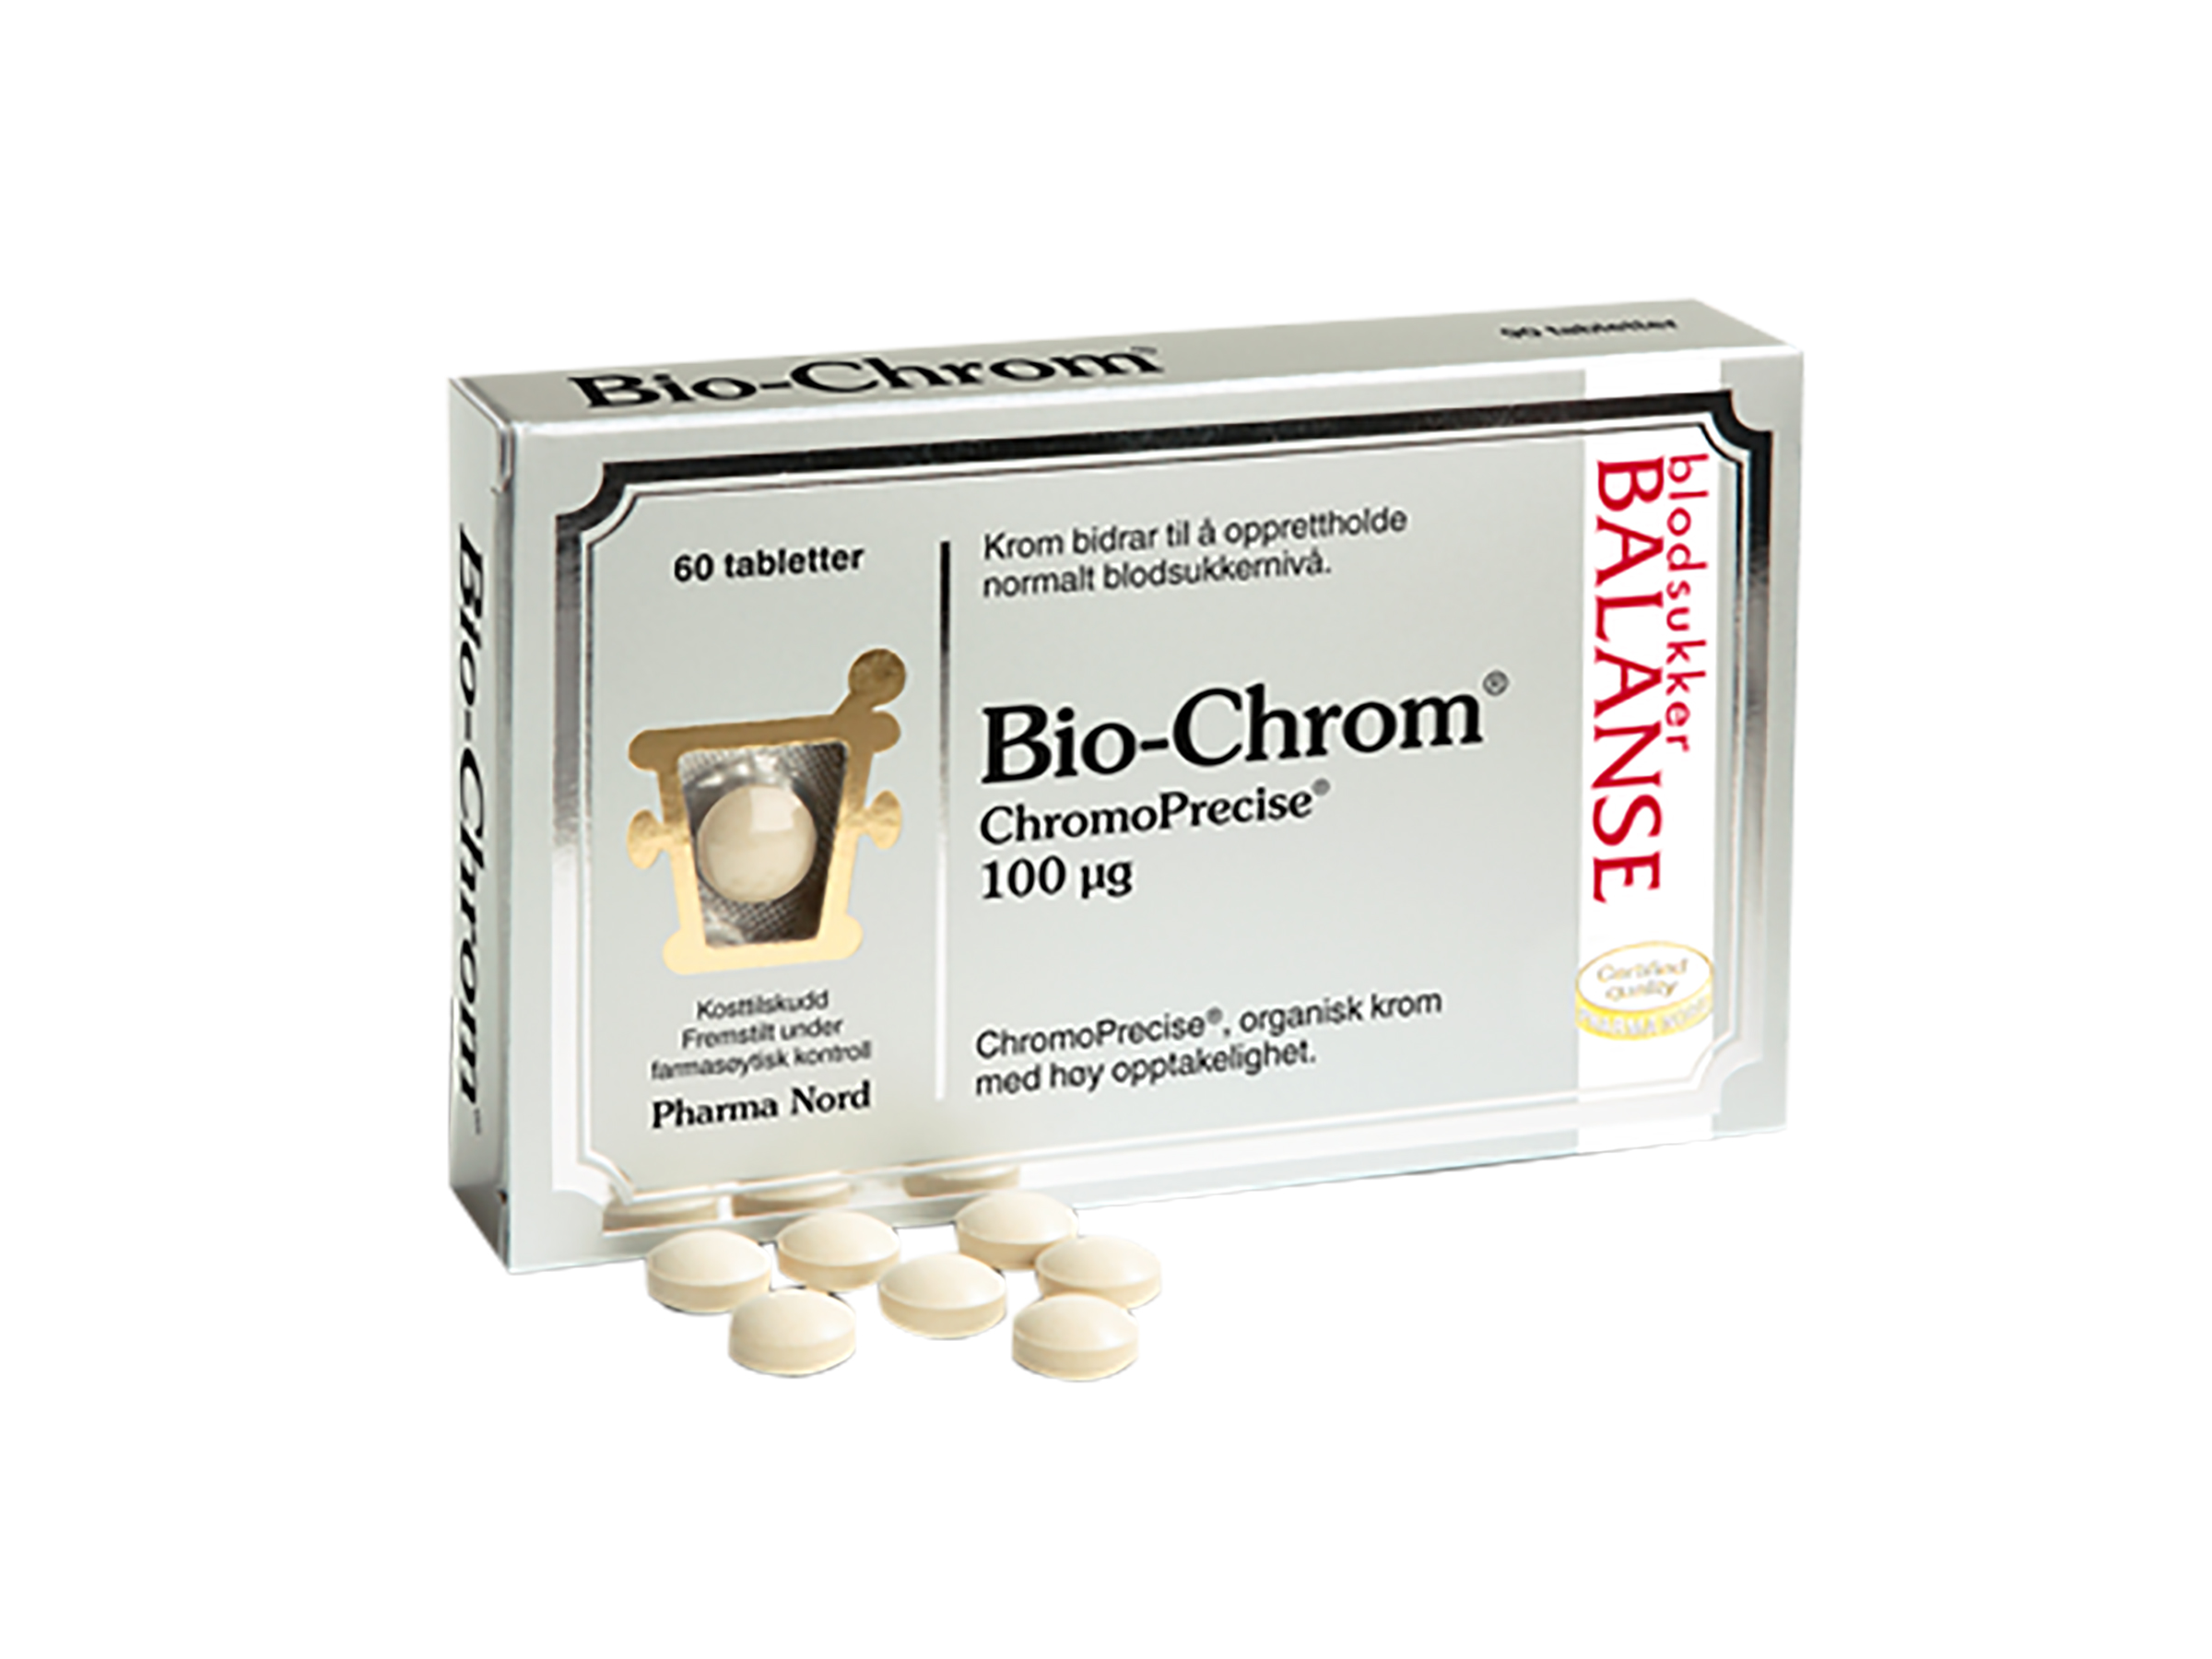 Pharma Nord Bio-Chrom ChromoPrecise 100mcg, 60 tabletter